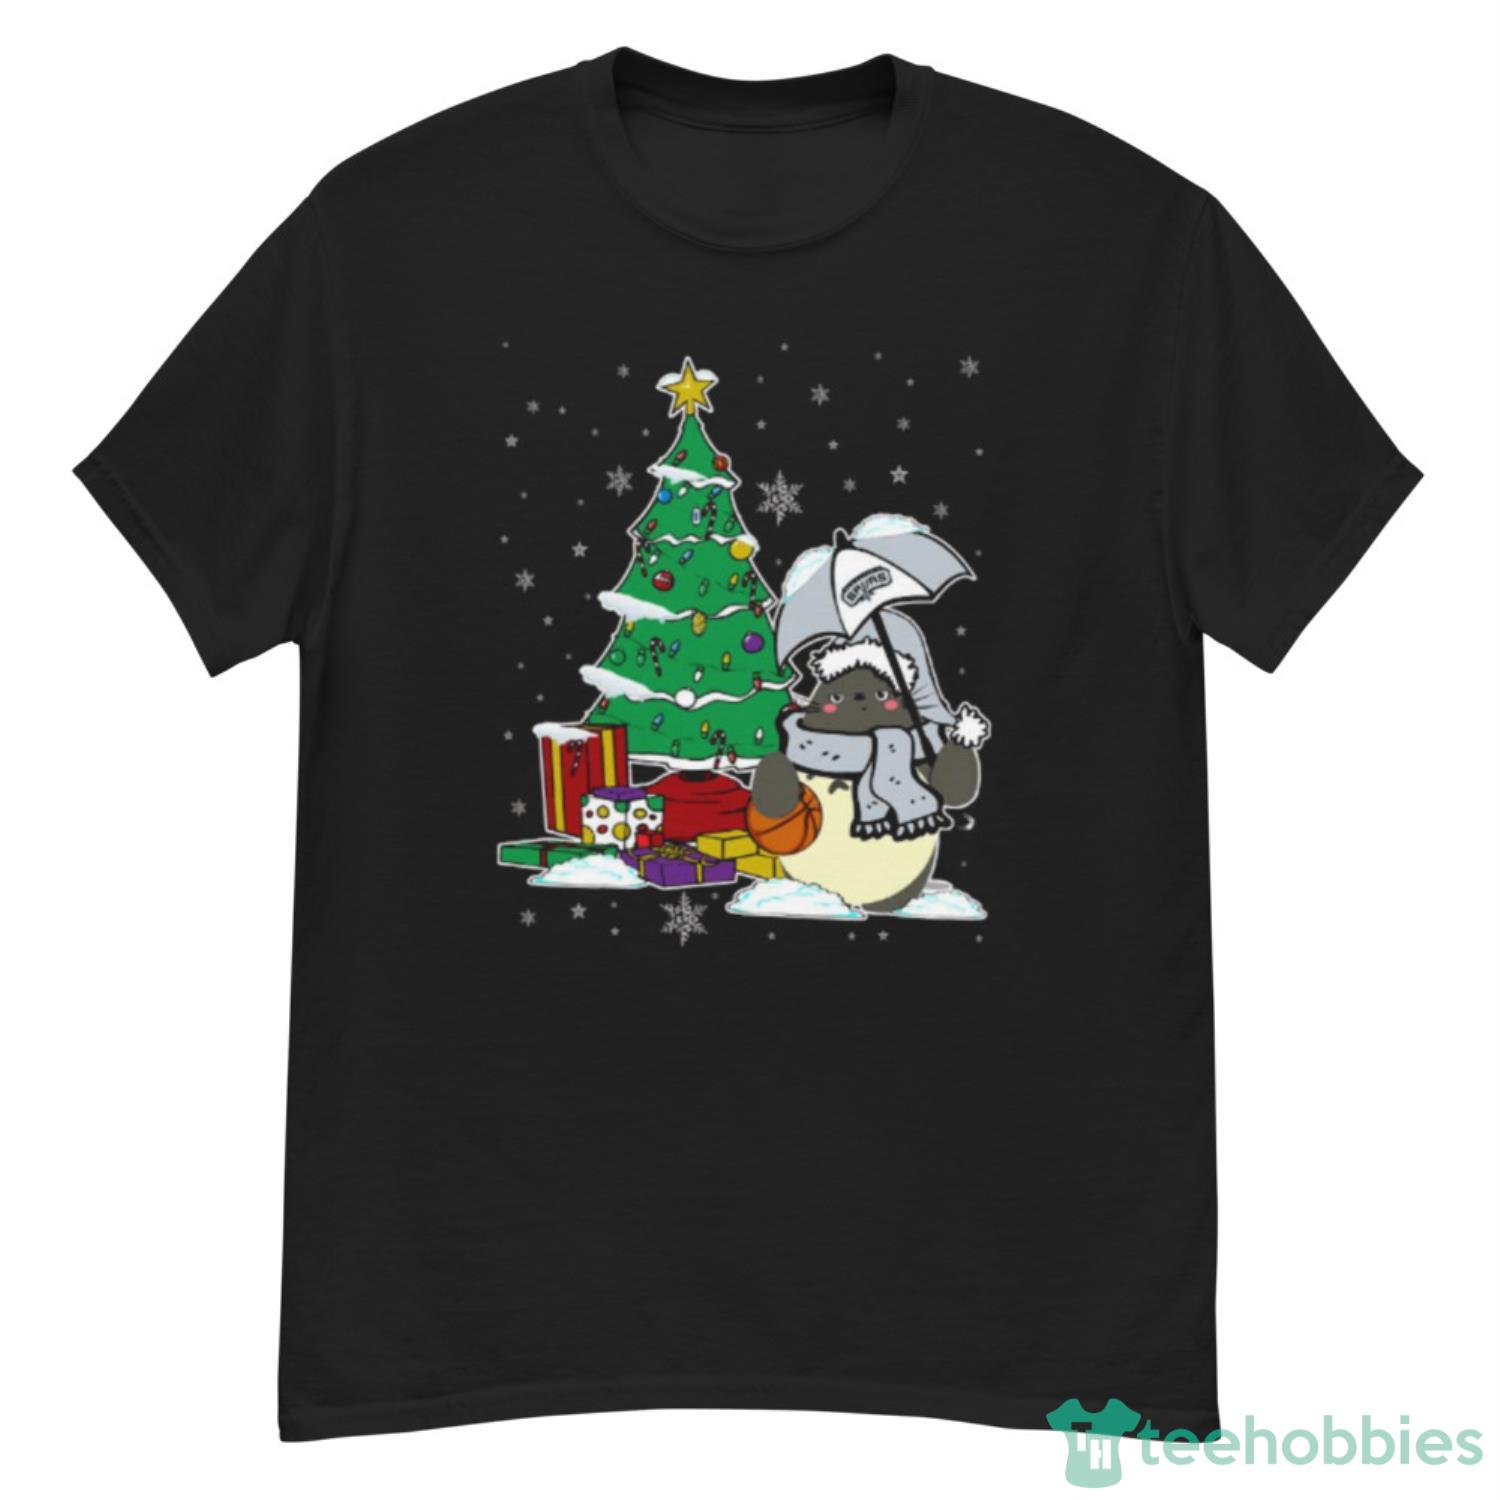 San Antonio Spurs NBA Basketball Cute Tonari No Totoro Christmas Shirt For Fans - G500 Men’s Classic T-Shirt